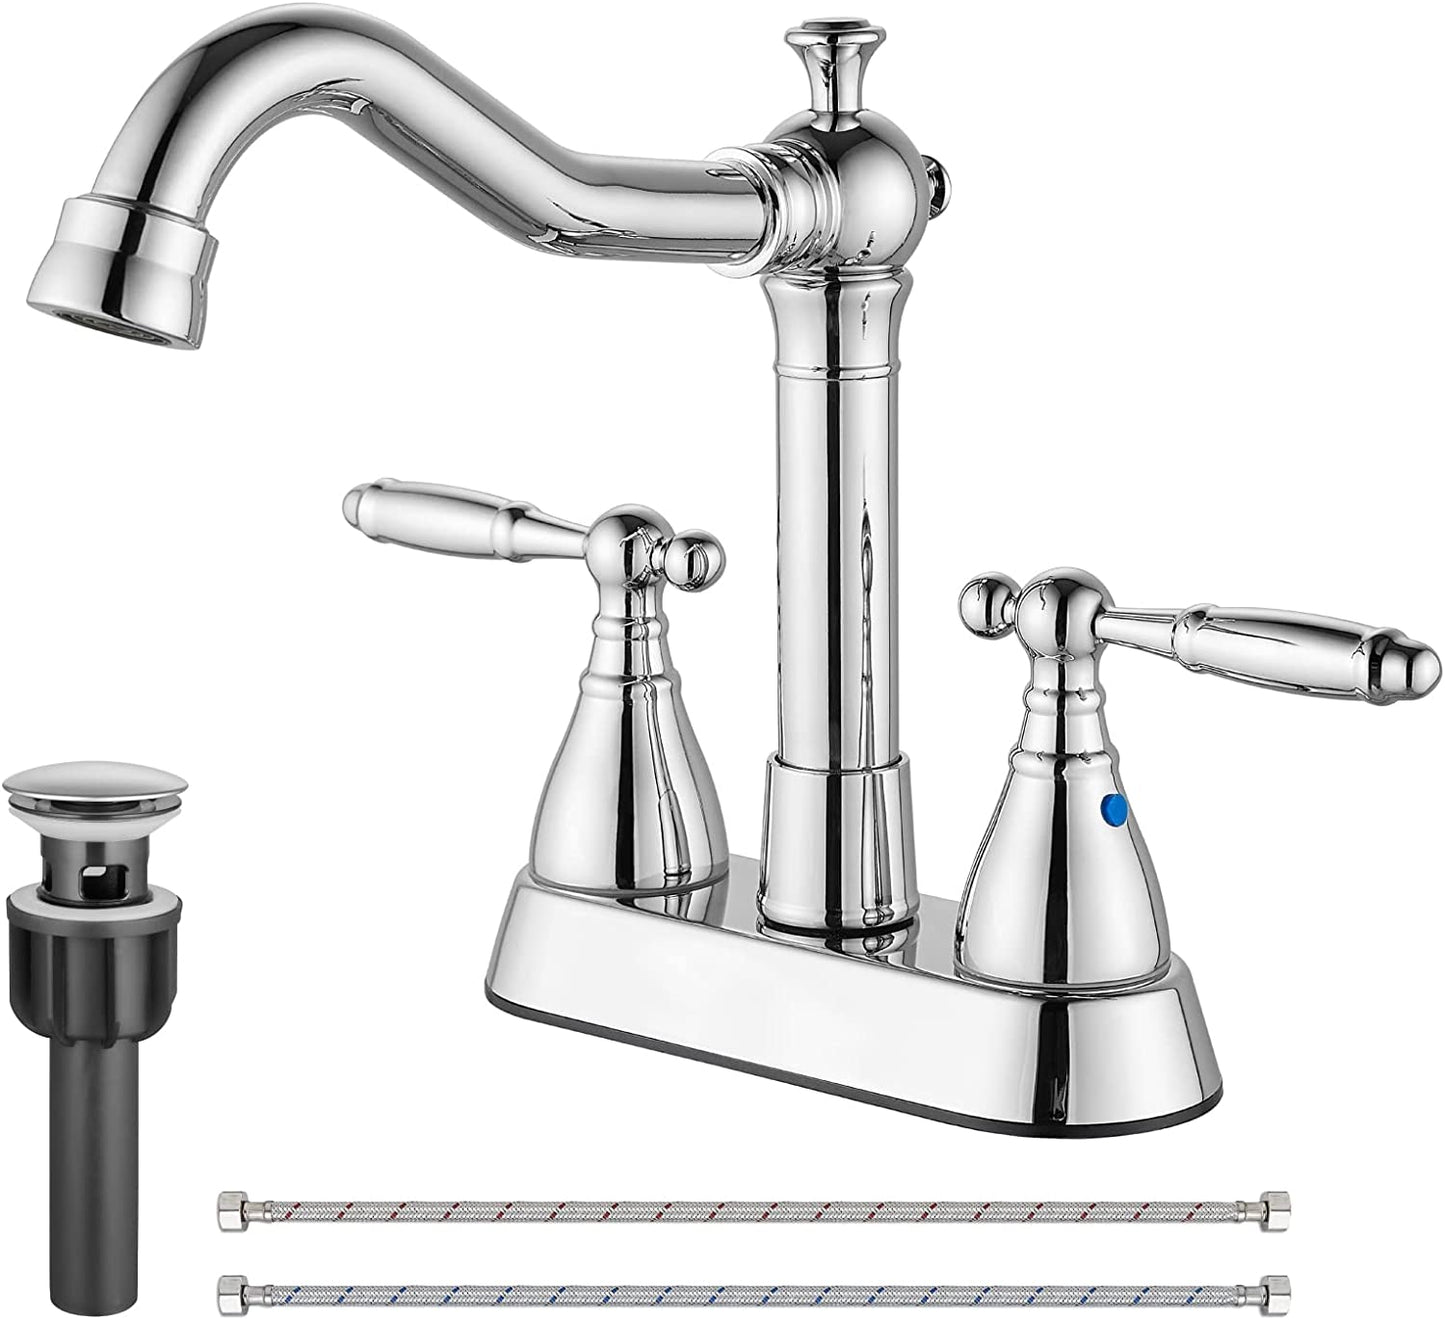 
                  
                    Cinwiny 4 Inch Centerset Bathroom Sink Faucet 2 Handles Deck Mount Lavatory Faucet Vanity Faucet Mixer Tap 2 Hole with Pop up Drain Assembly
                  
                